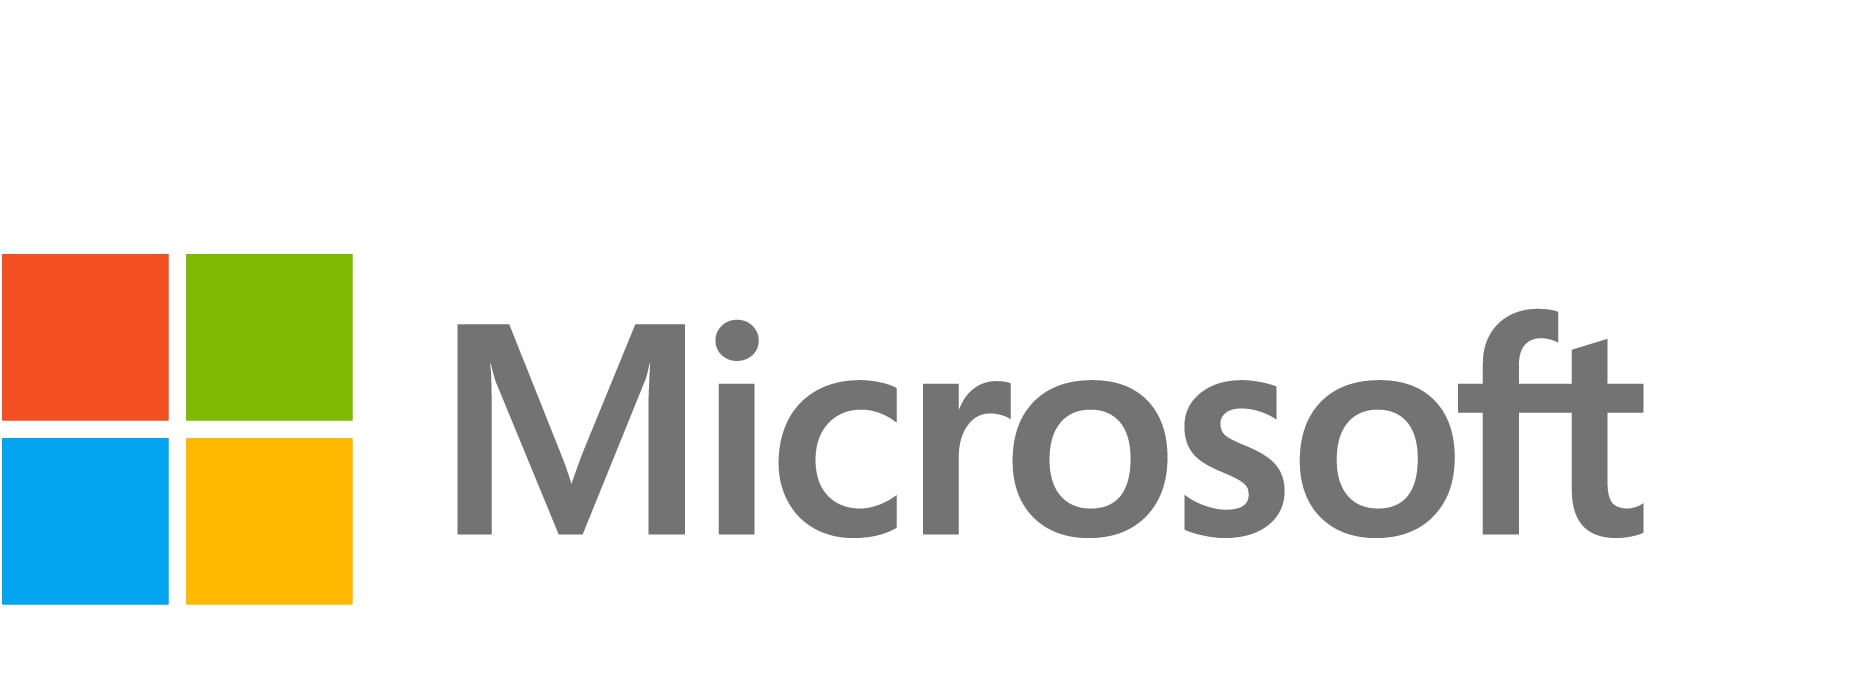 Microsoft Office 365 E1 - subscription license (1 year) - 1 license